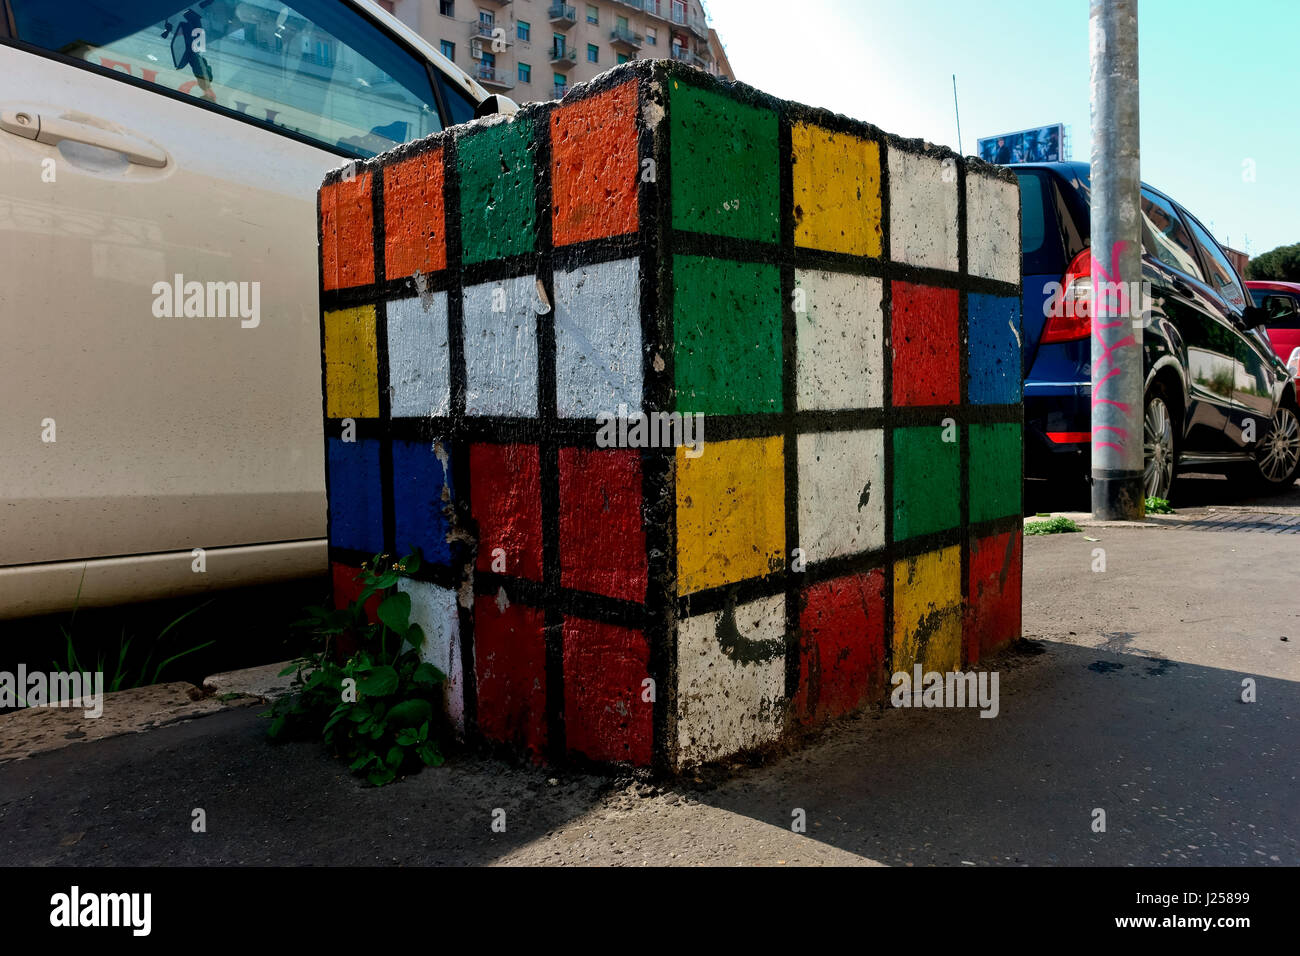 Bemalter Zementwürfel, Rubik's Cube style. Komische, skurrile Straßenkunst. Graffiti. Rom, Italien, Europa, Europäische Union, EU. Stockfoto